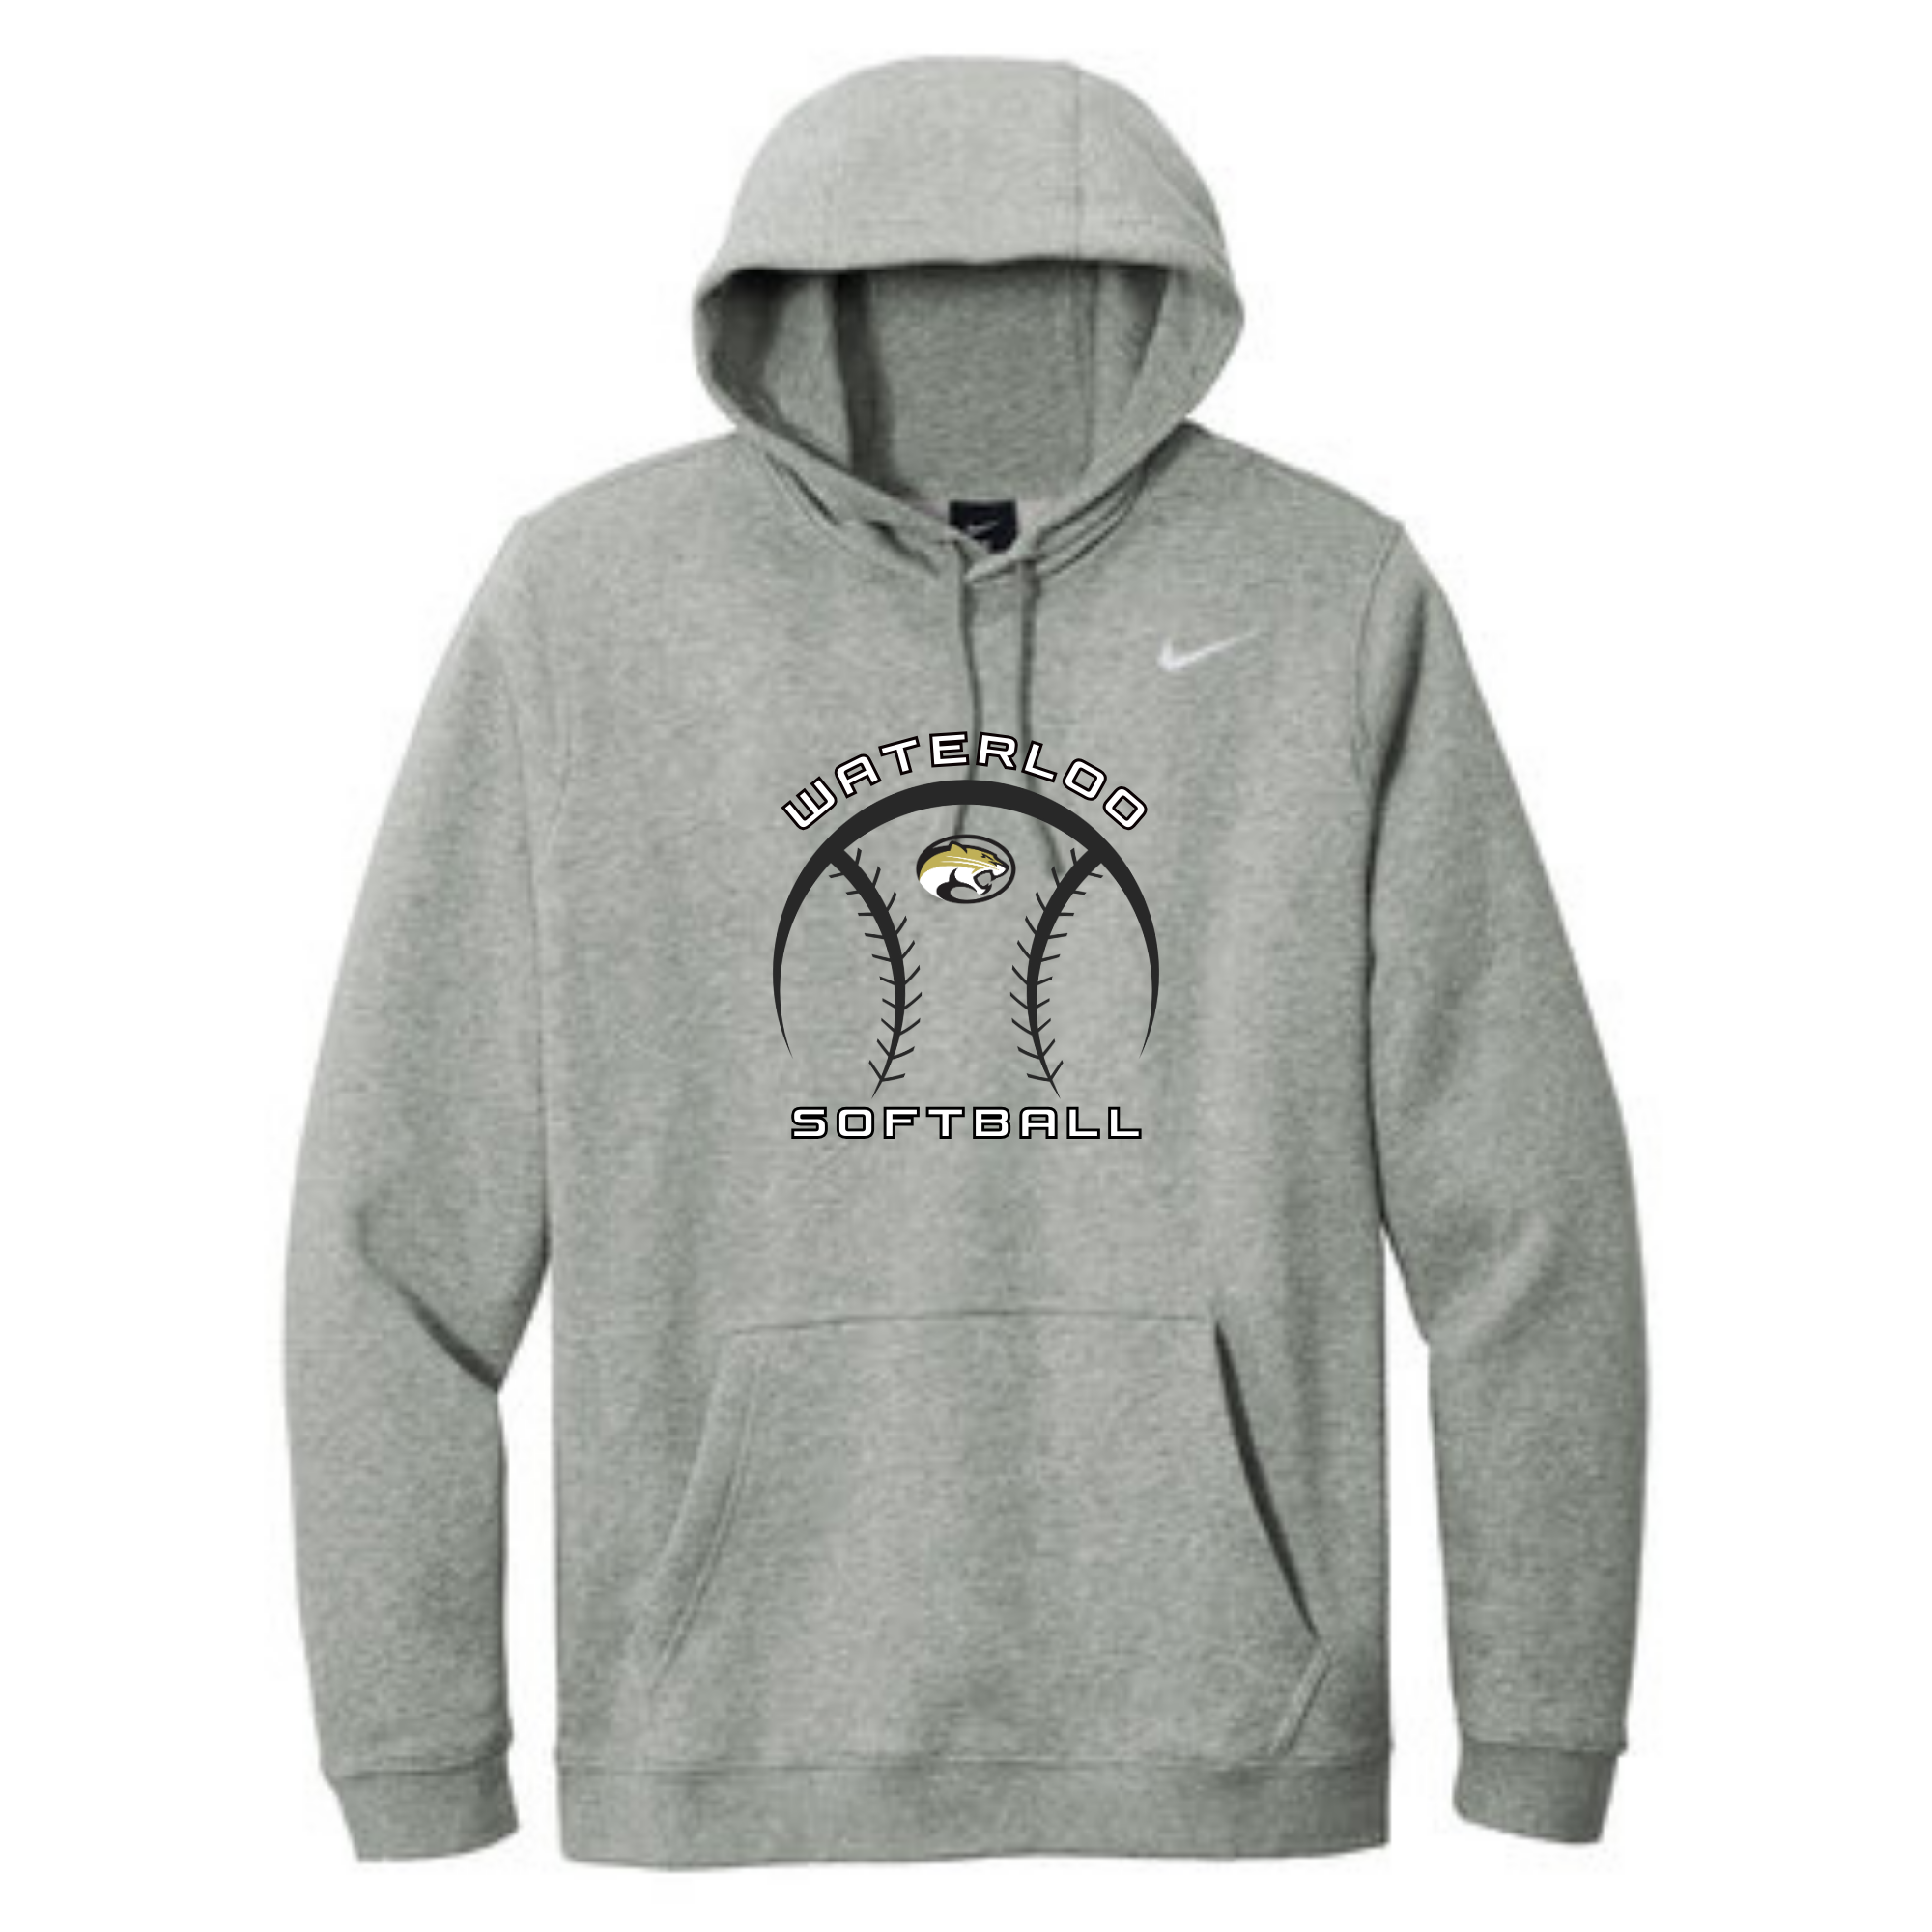 Waterloo Softball Nike Hoodie- CJ1611 Dark Grey Heather